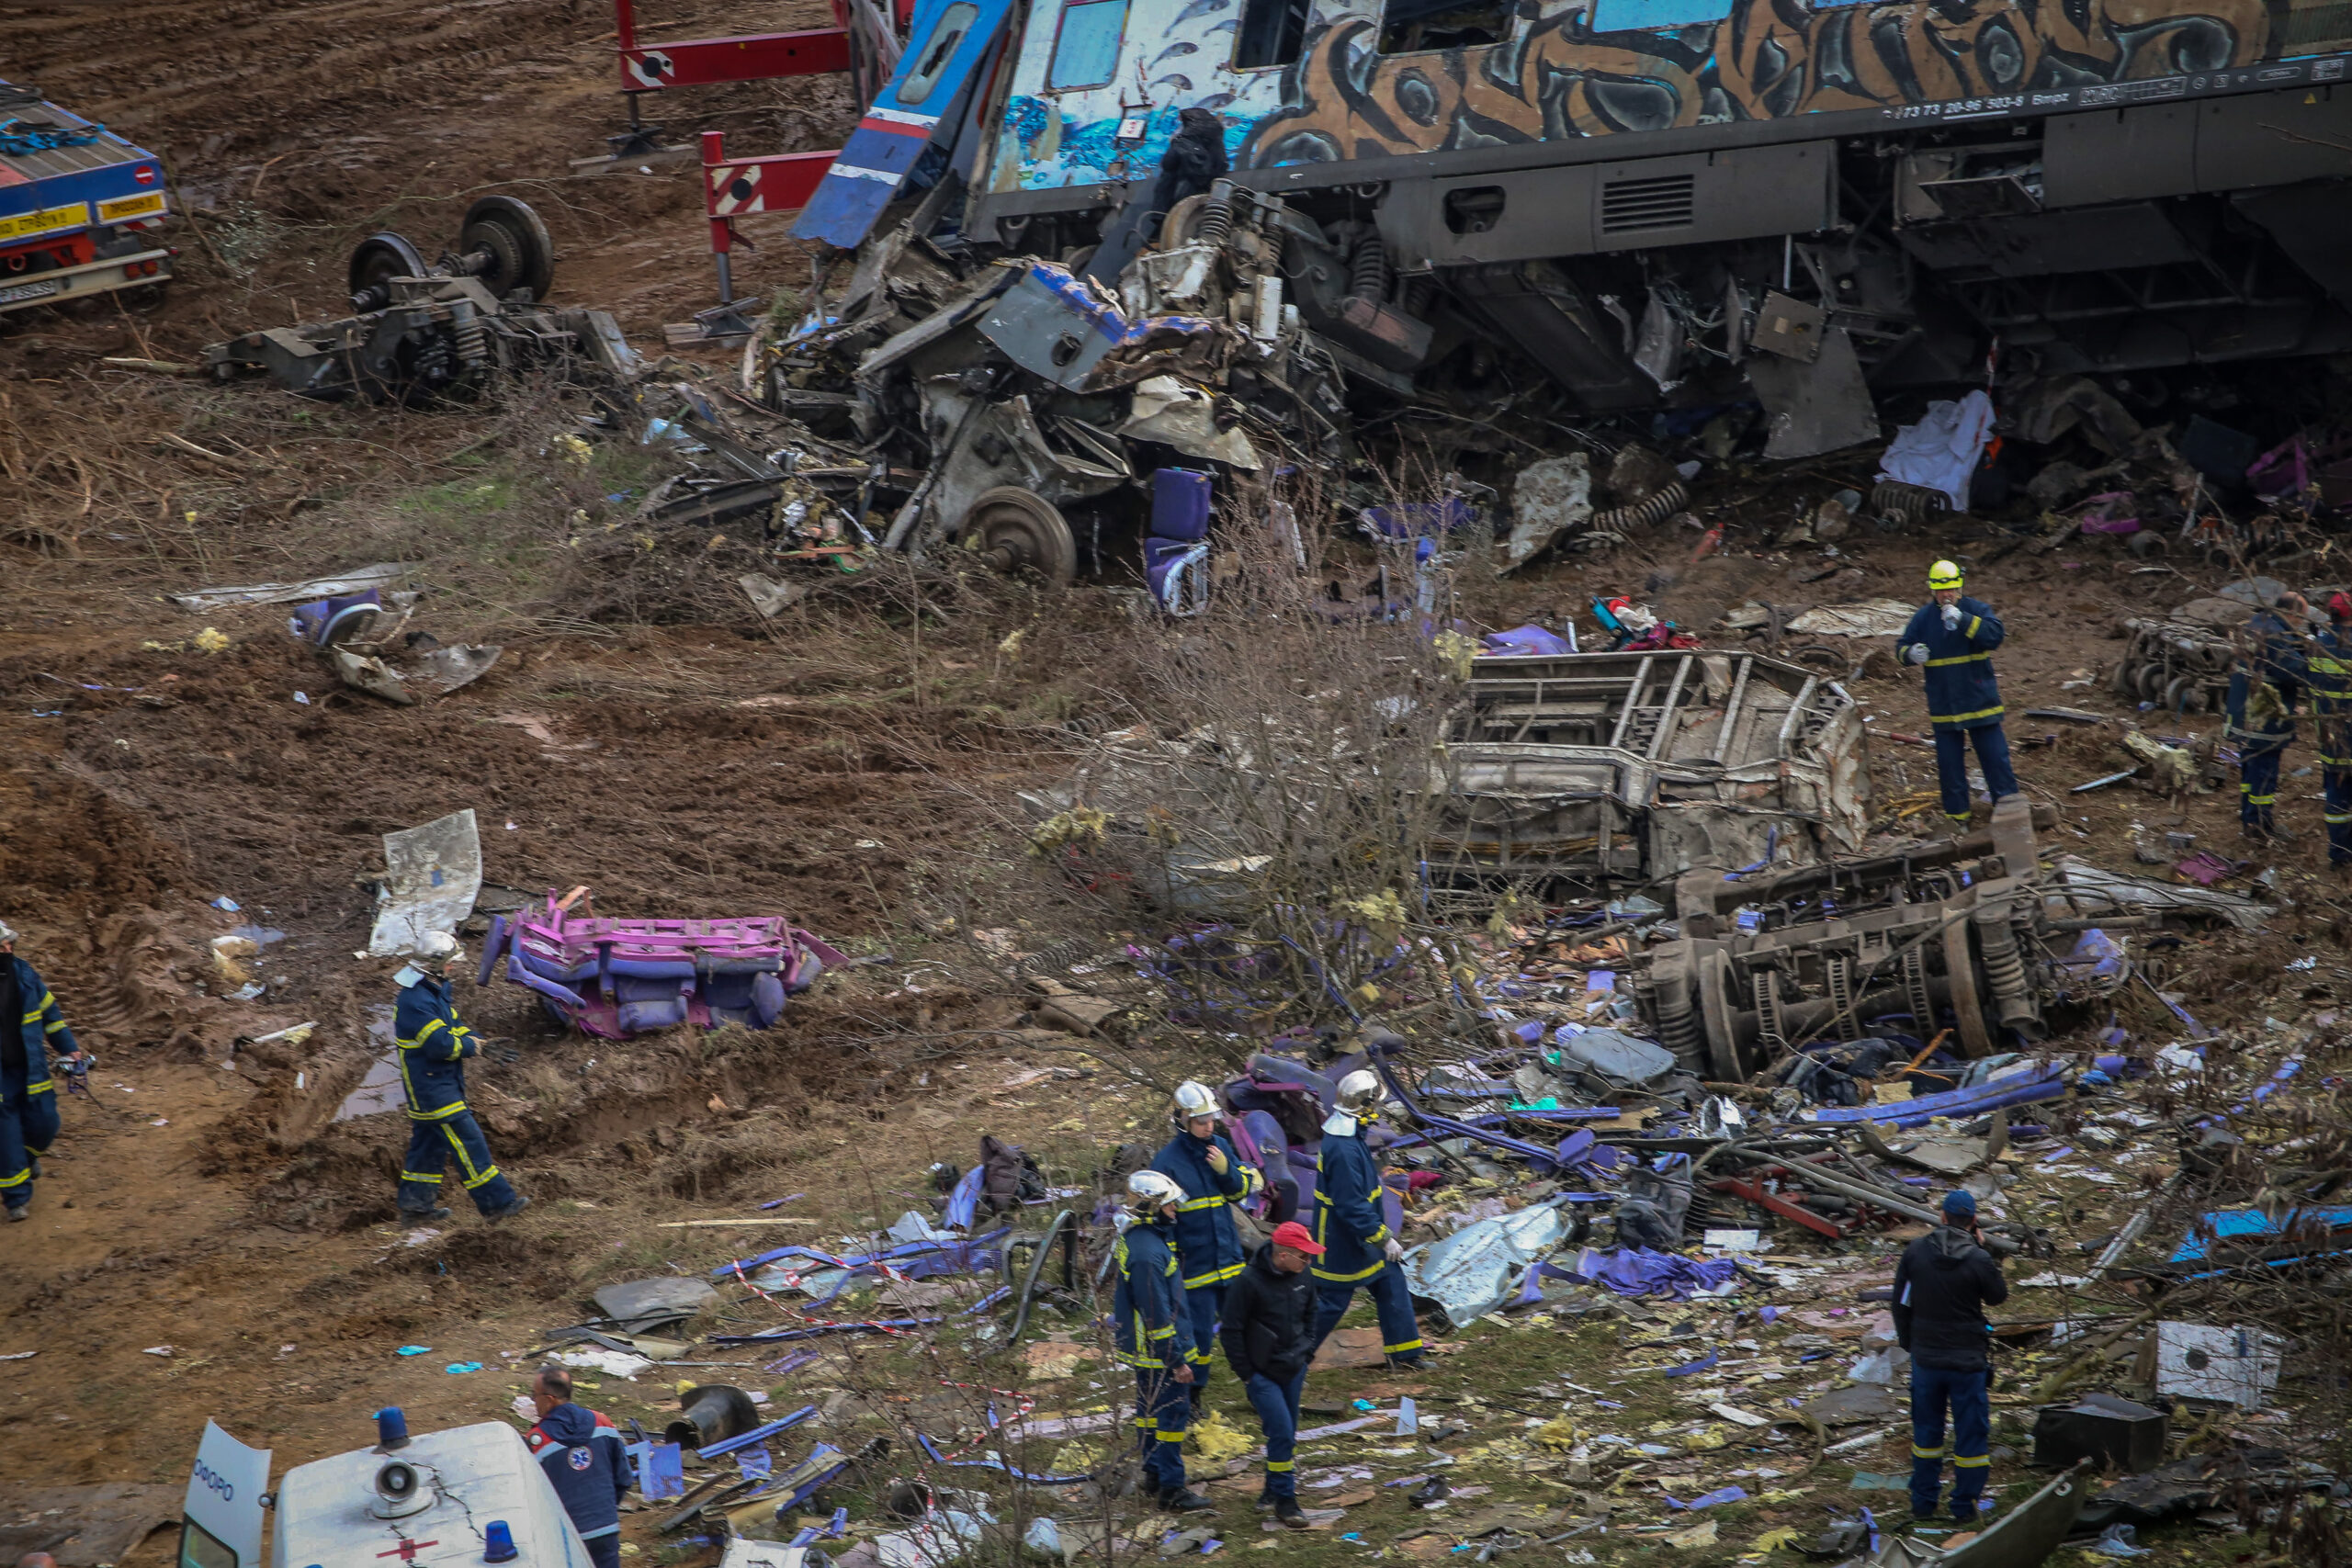 Live – Σύγκρουση τρένων στα Τέμπη: Εθνική τραγωδία με τουλάχιστον 36 νεκρούς – Τριήμερο εθνικό πένθος